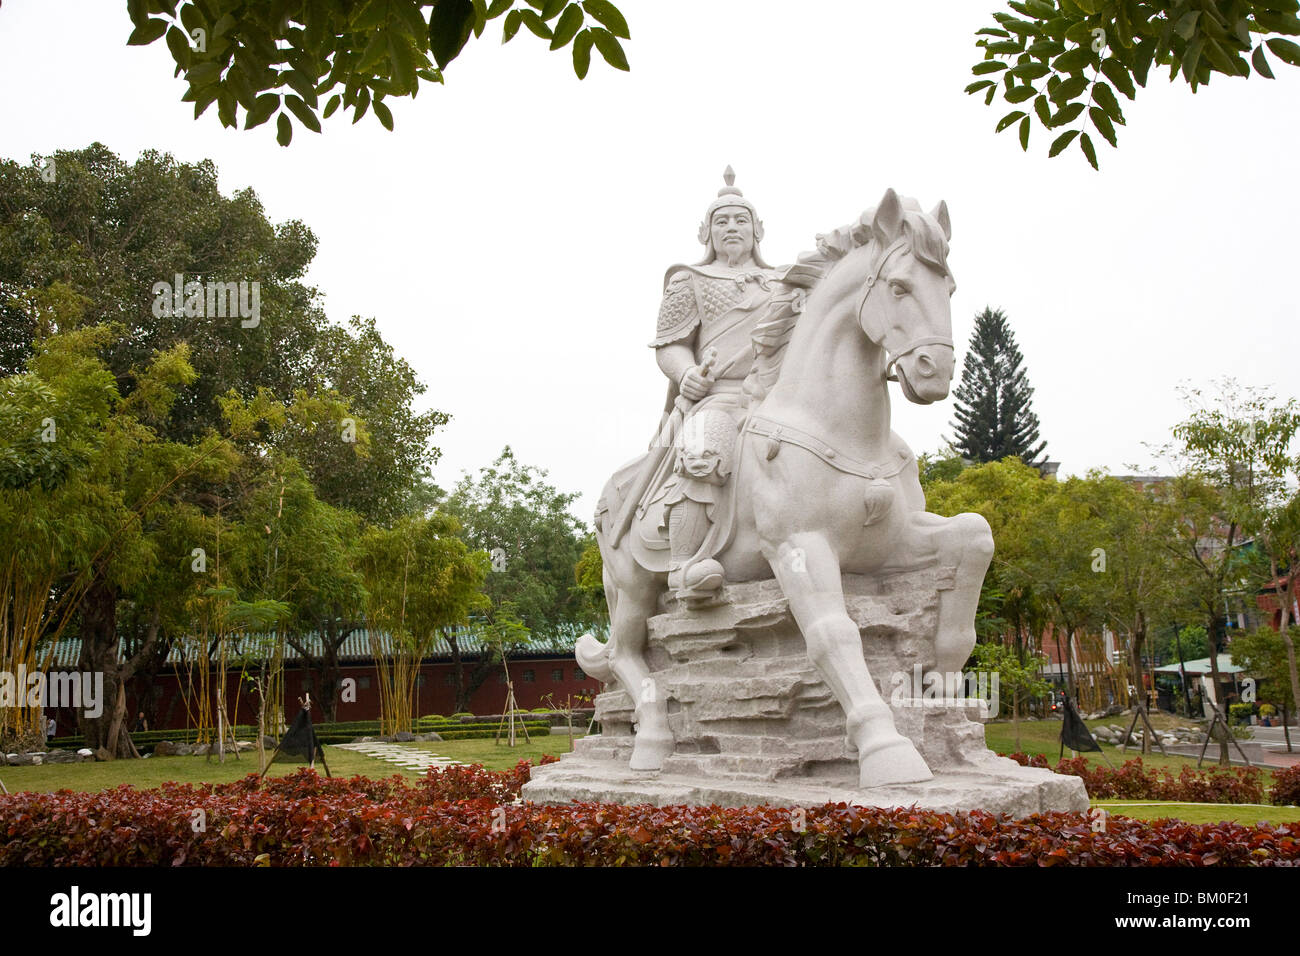 Monumento equestre di Koxinga presso un parco, Zheng Chenggong, Tainan, Repubblica di Cina e Taiwan, in Asia Foto Stock